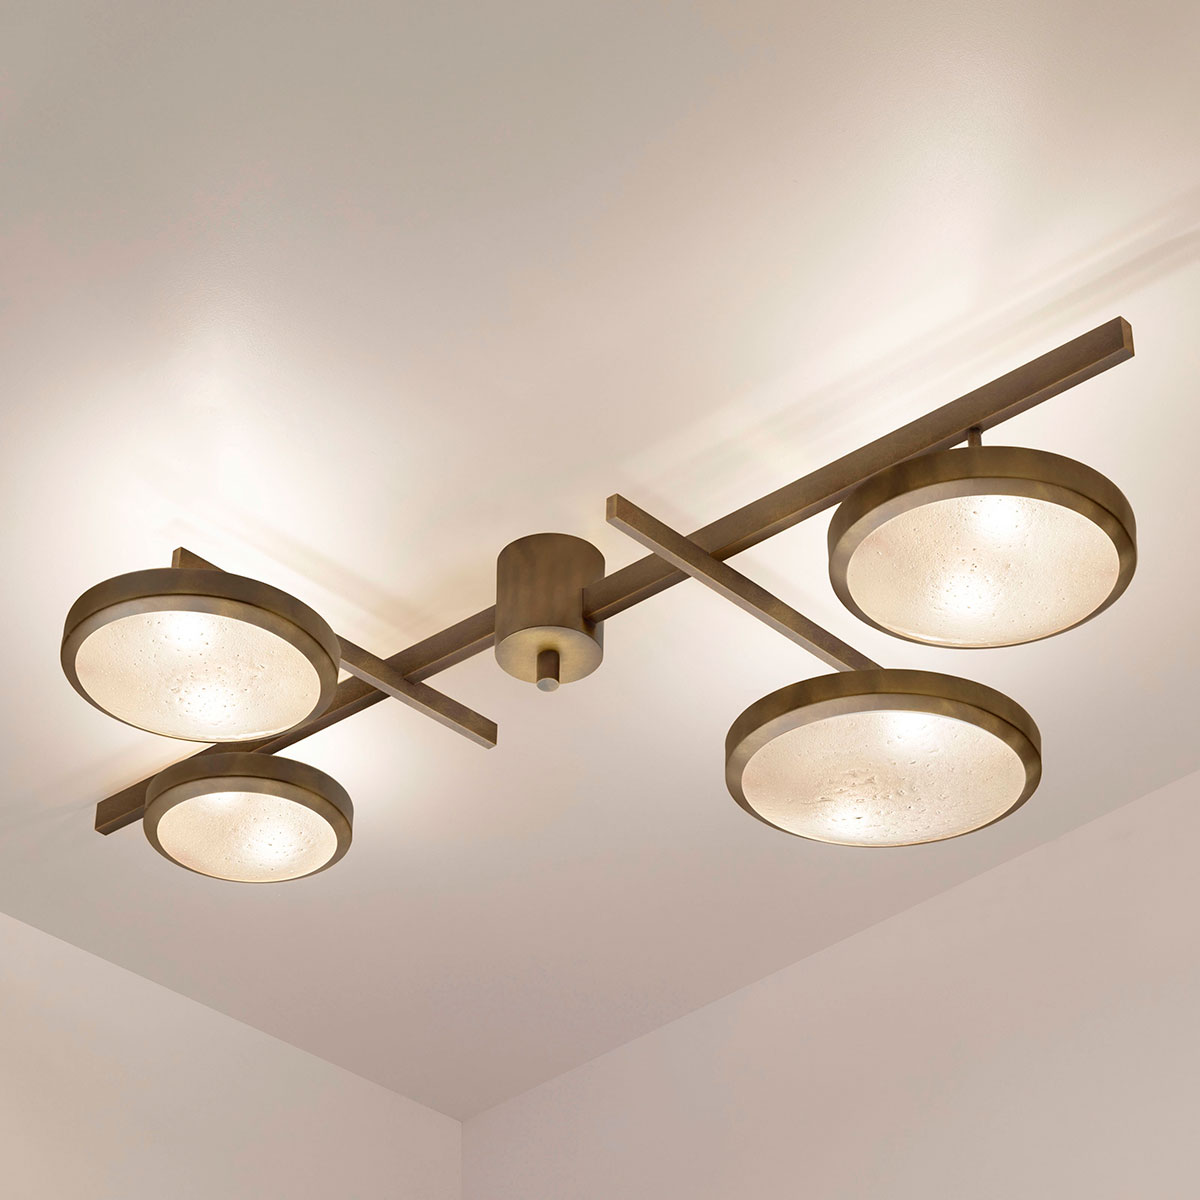 Tetrix ceiling light with bronzo nuvolato finish by Gaspare Asaro